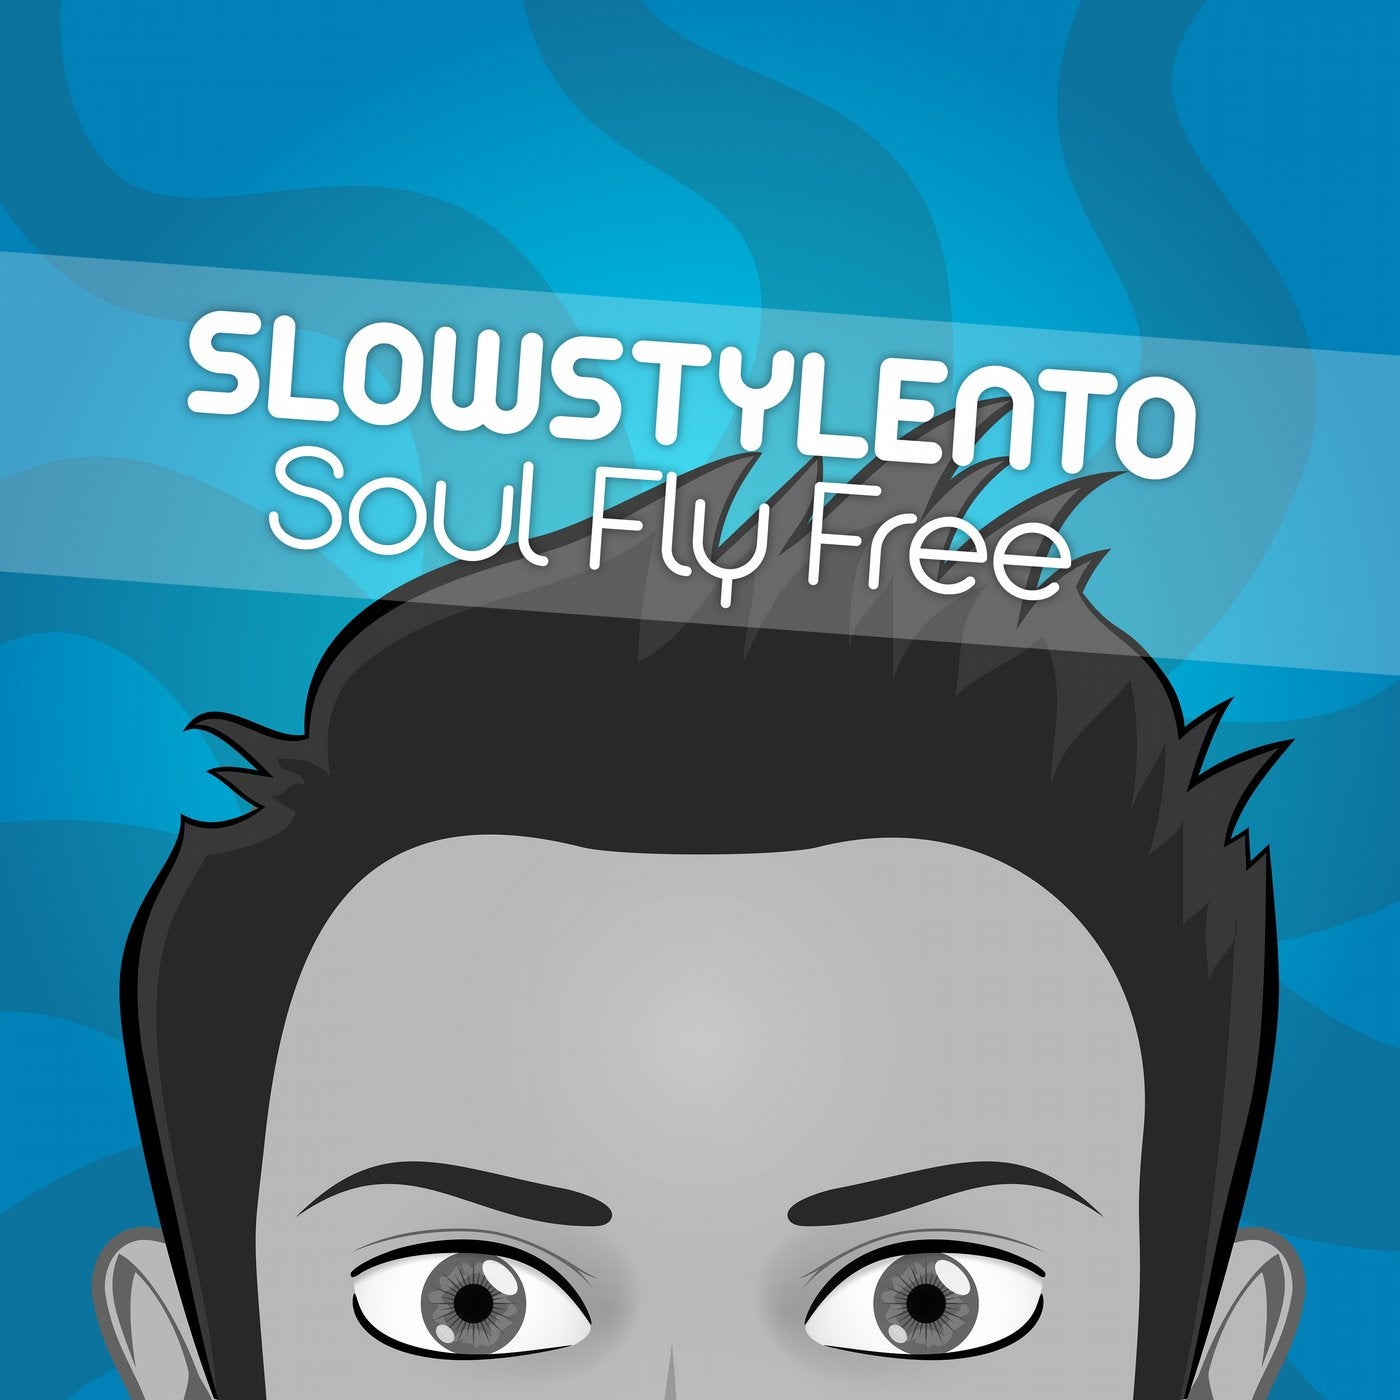 Soul Fly Free